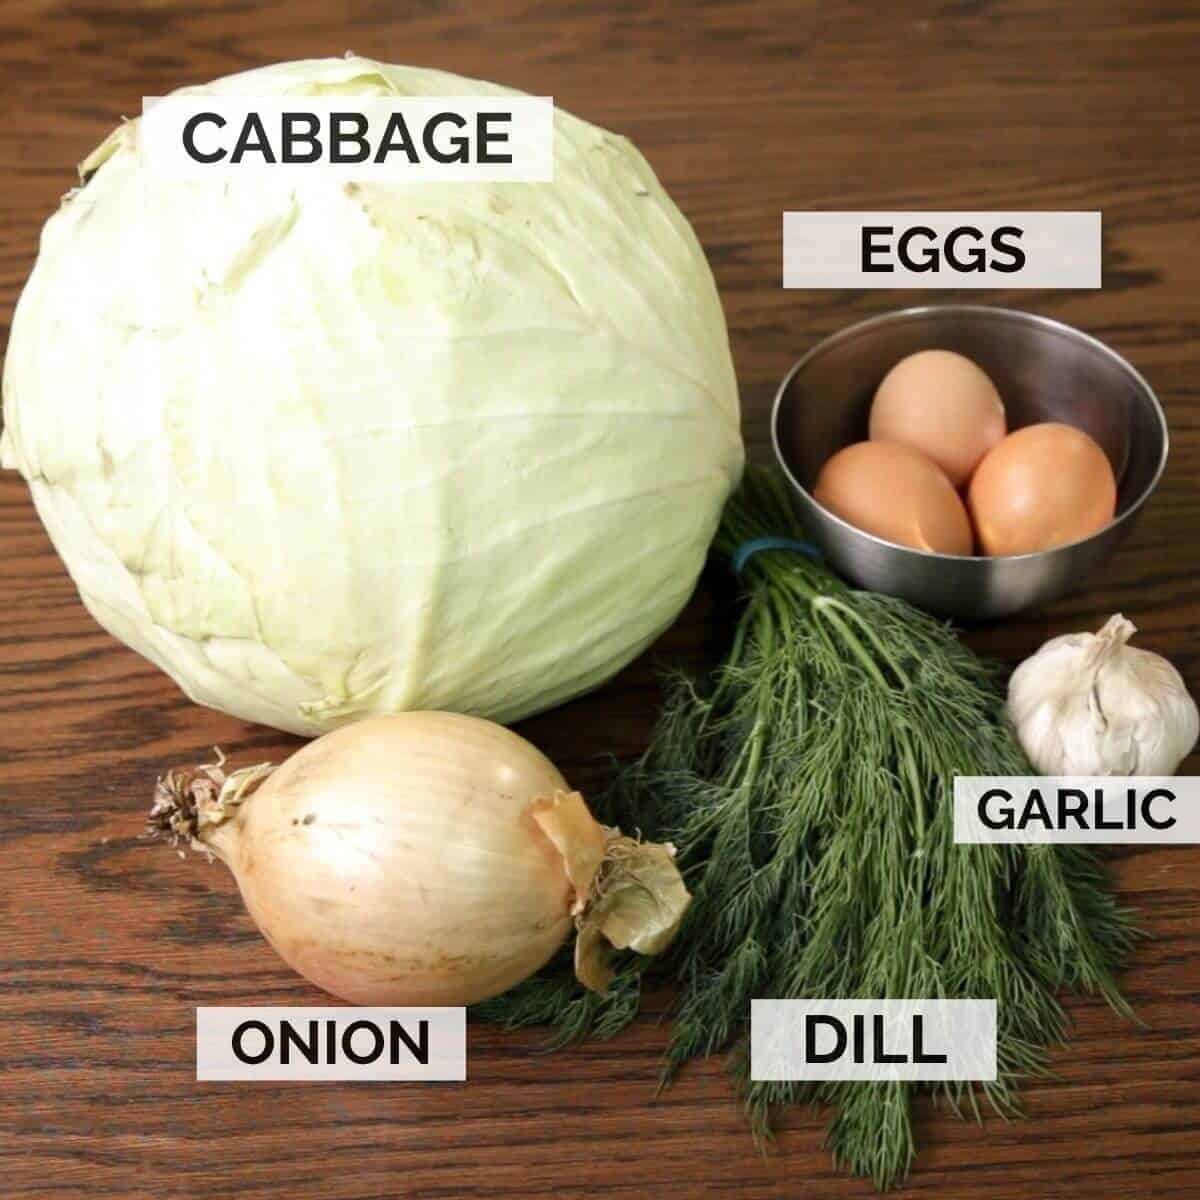 Ingredients for making cabbage piroshki filling on a dark wooden surface.